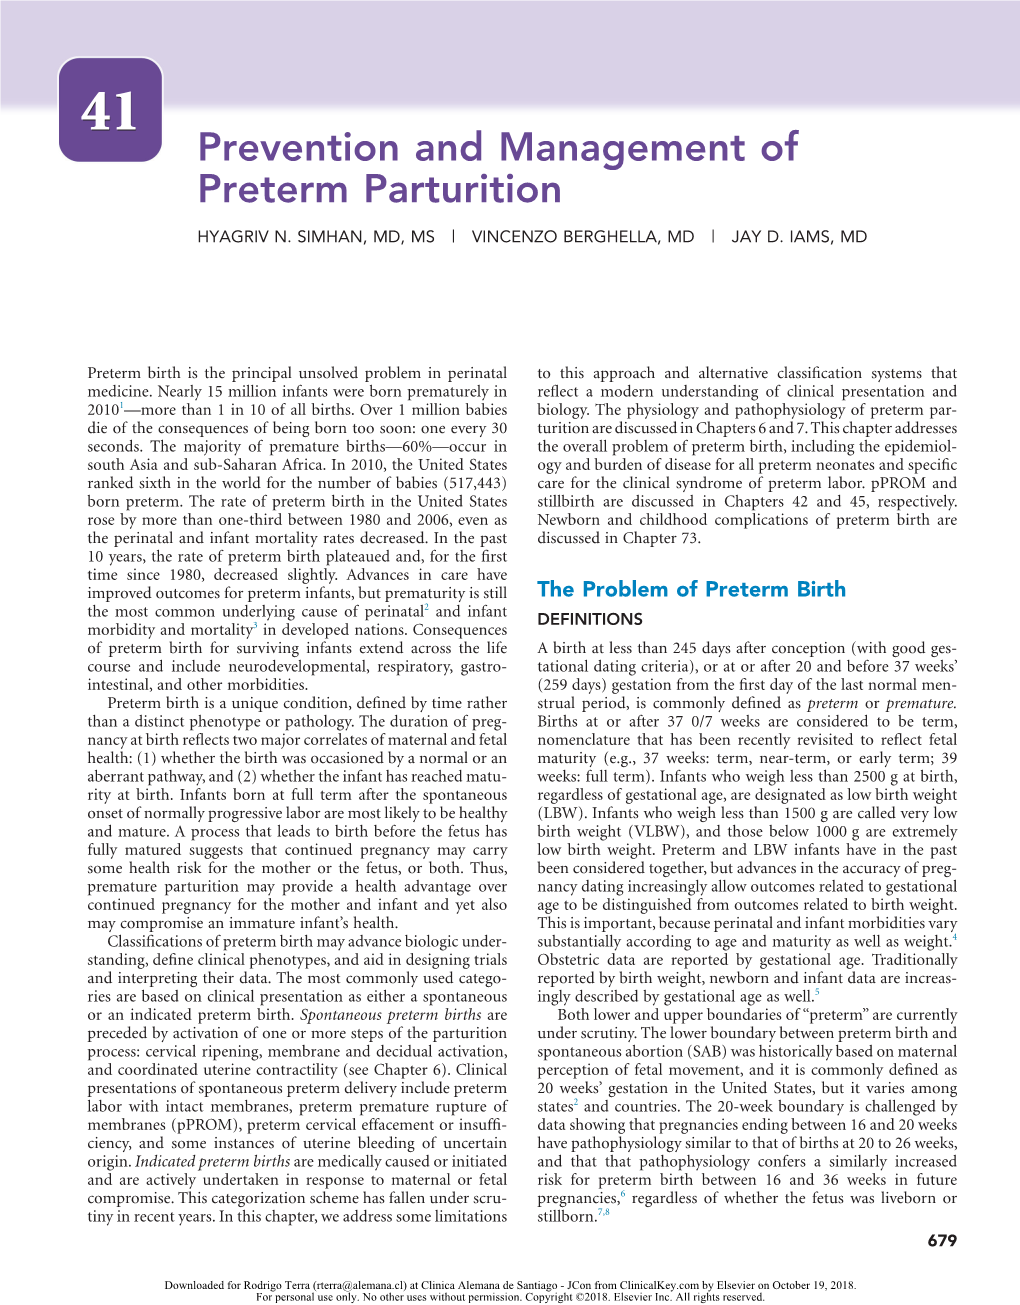 Prevention and Management of Preterm Parturition